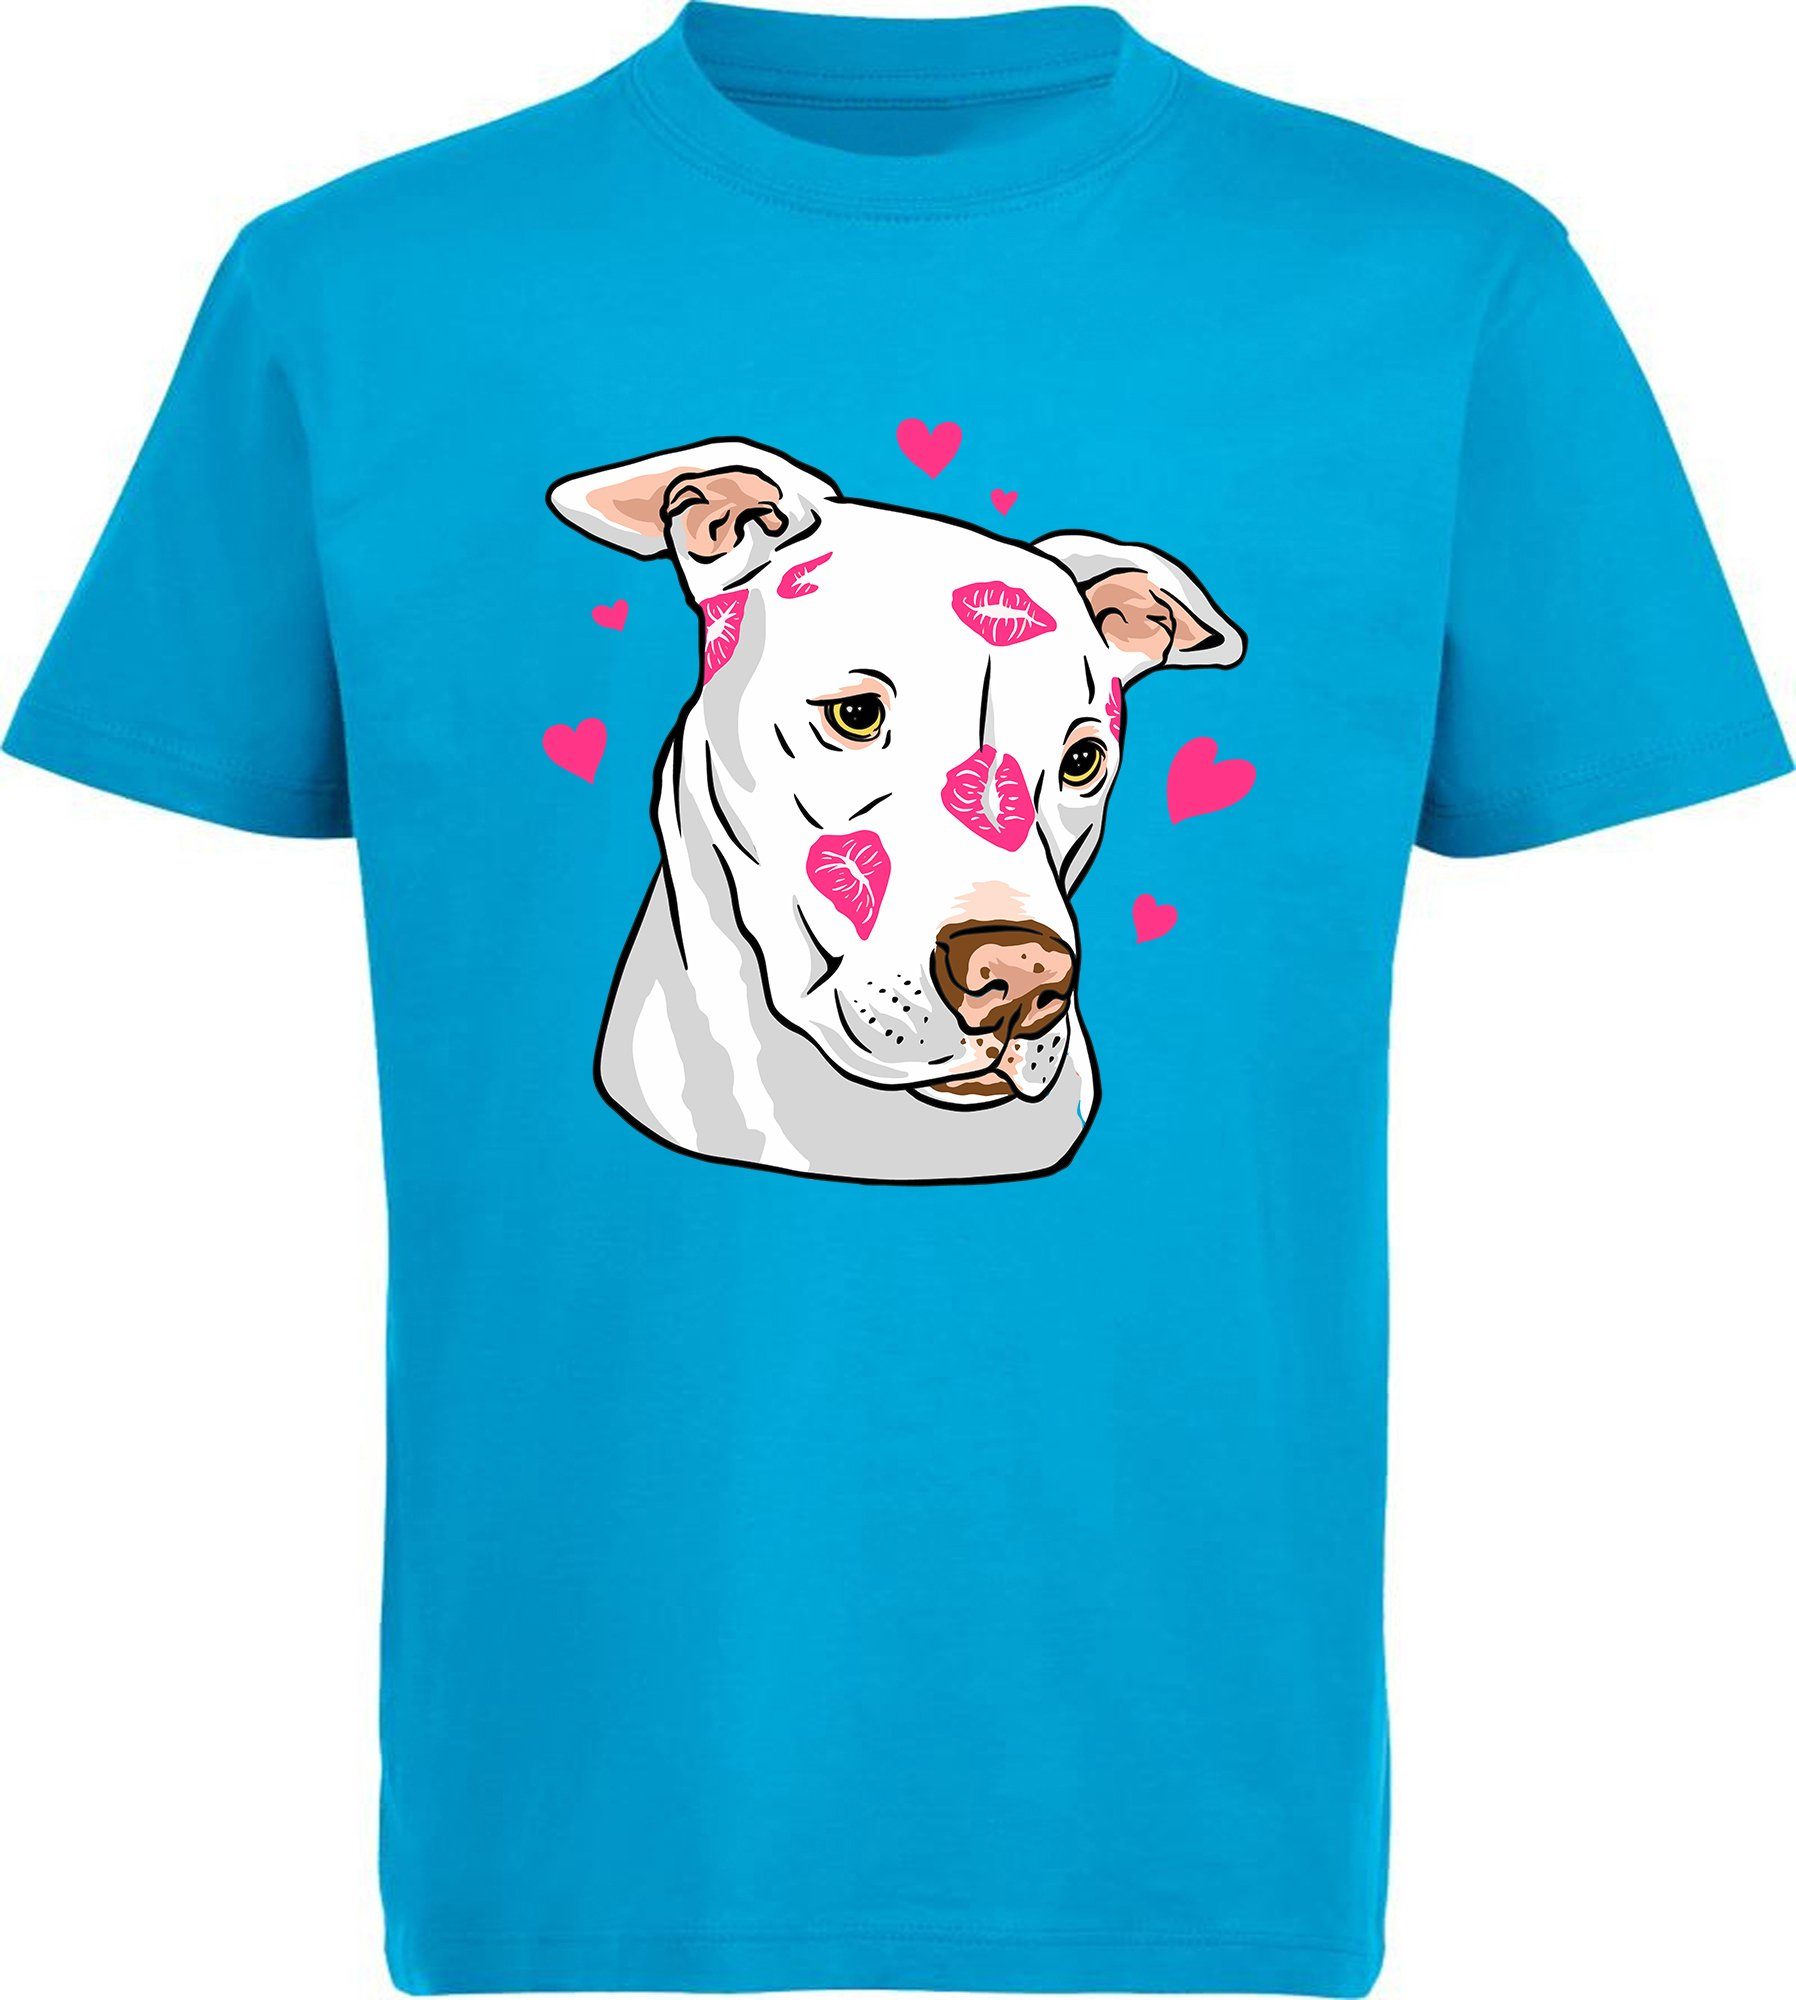 MyDesign24 Print-Shirt bedrucktes Kinder Hunde T-Shirt - Pitbull mit Herzen Baumwollshirt mit Aufdruck, i229 aqua blau